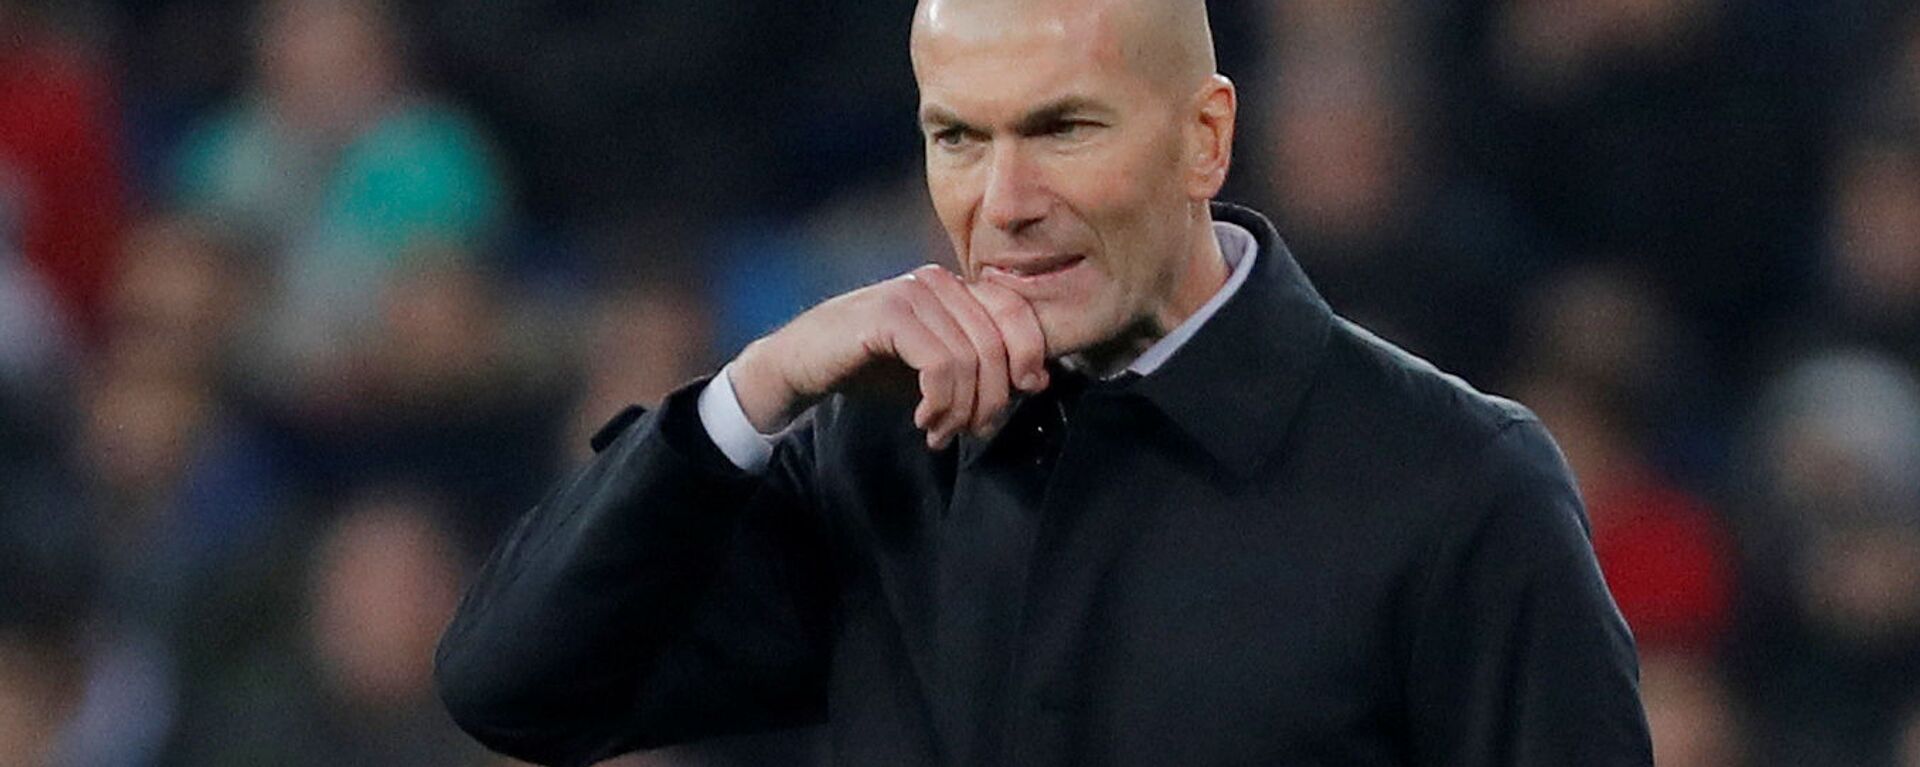 El exentrenador del Real Madrid Zinedine Zidane - Sputnik Mundo, 1920, 31.05.2021